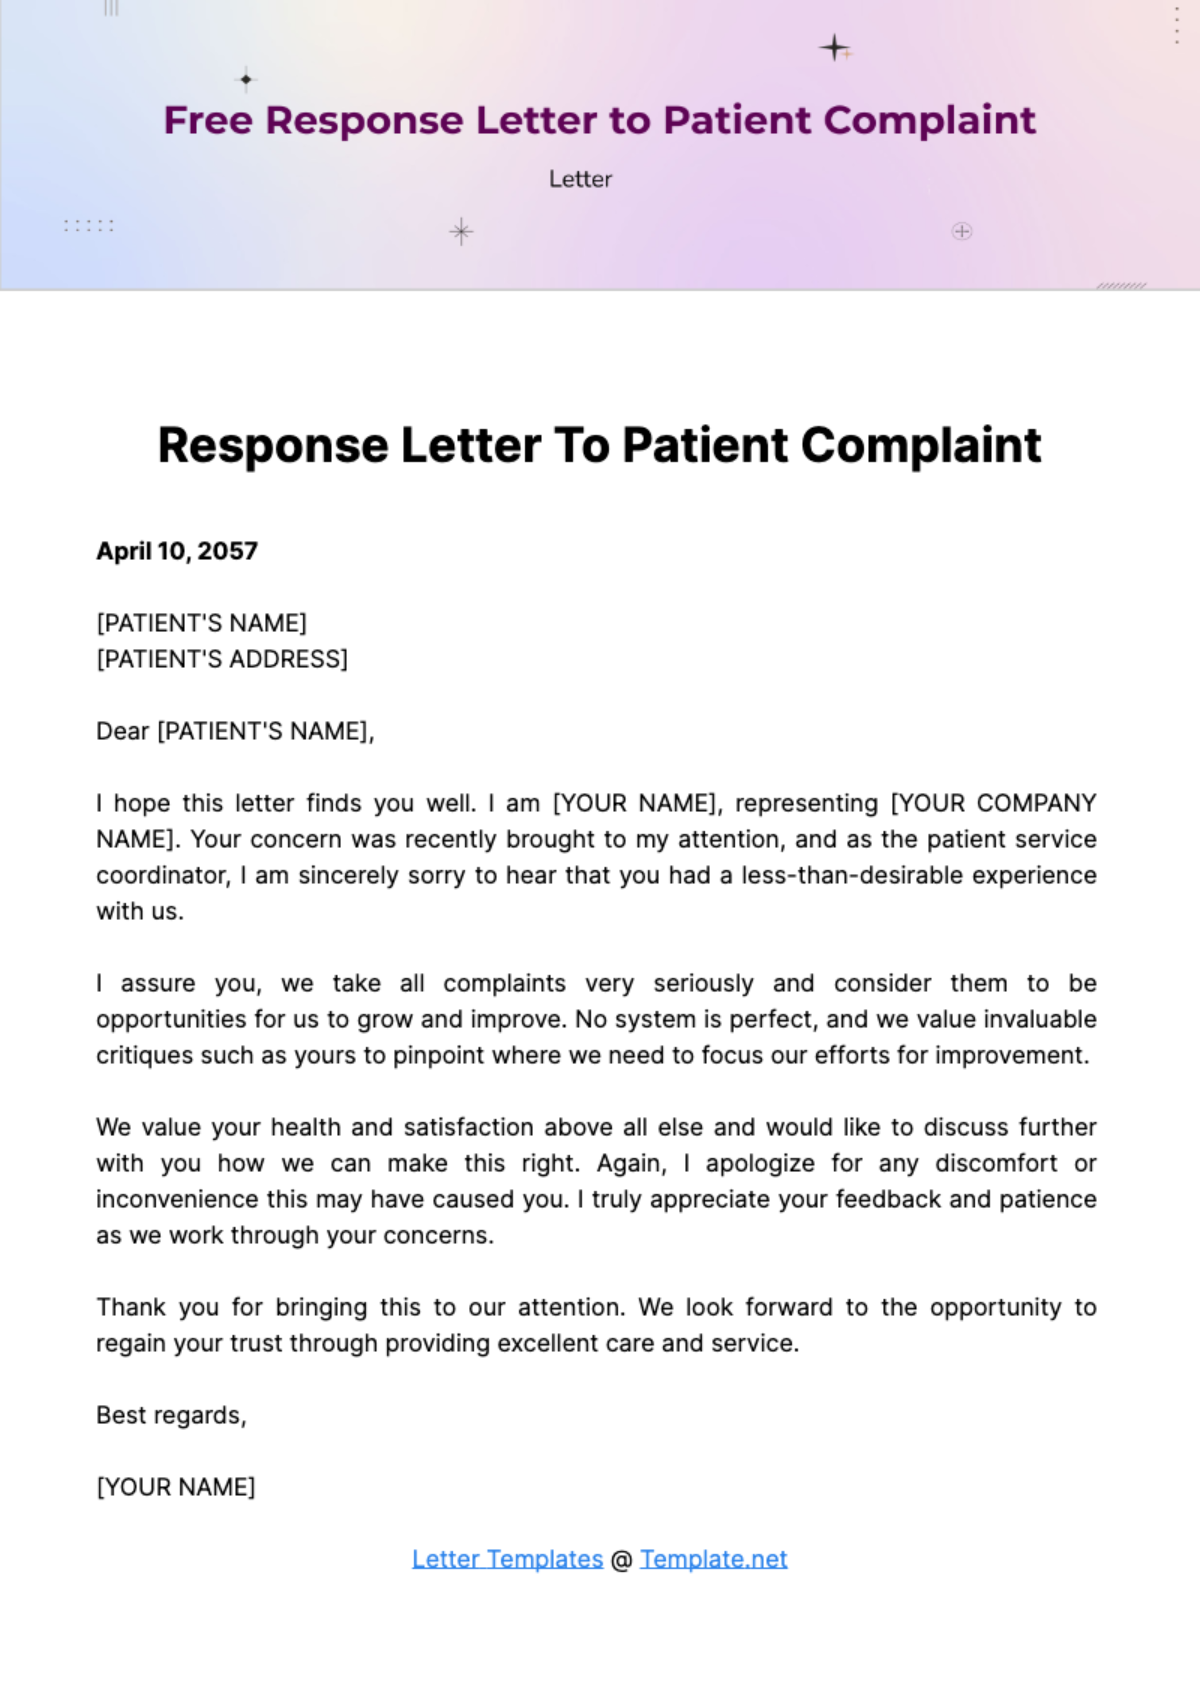 Response Letter to Patient Complaint Template